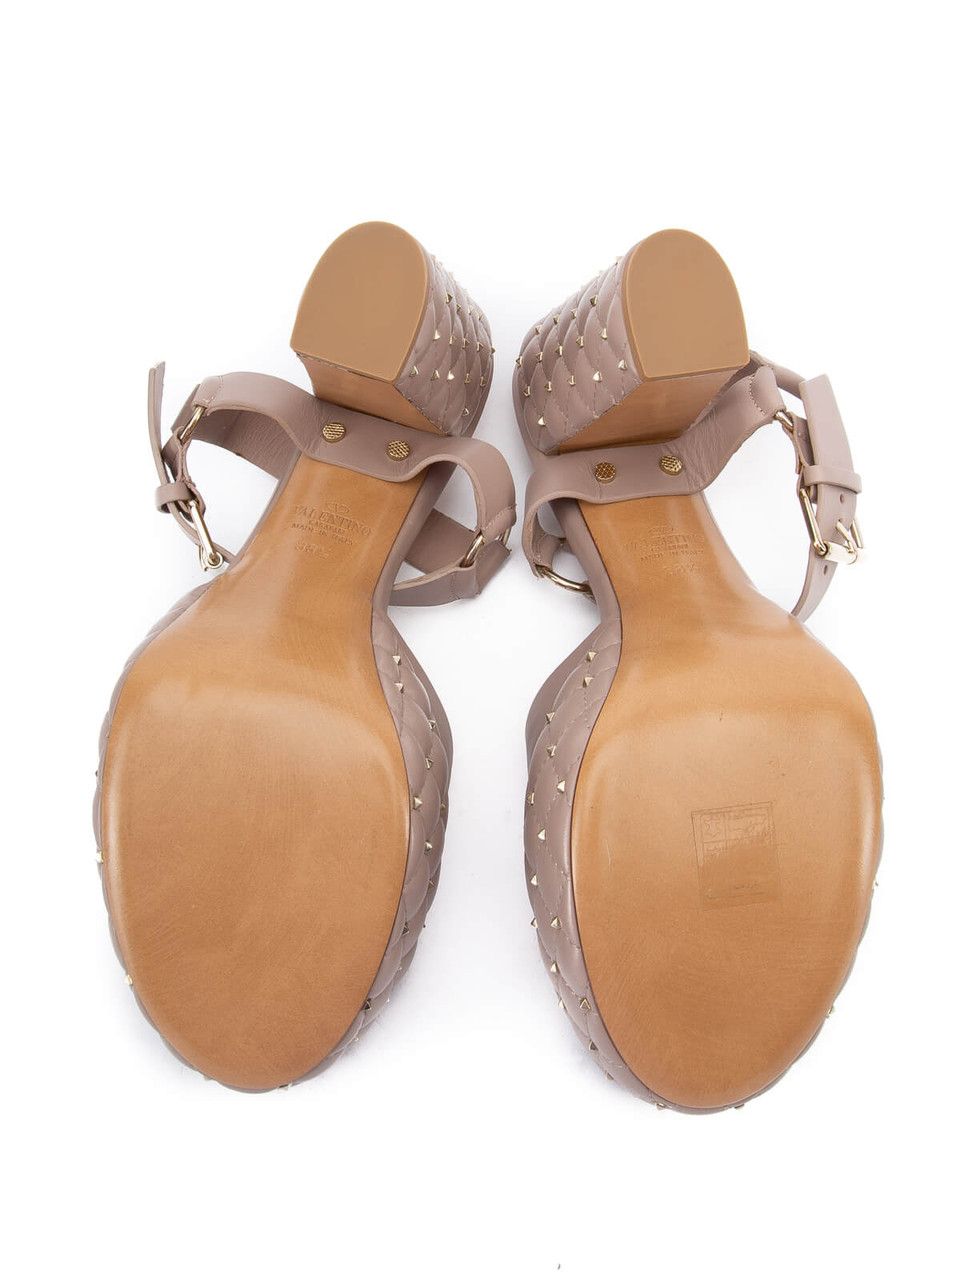 Valentino Women's Rockstud Spike Platform Sandals, Size 5.5 UK, Beige Quilted Leather